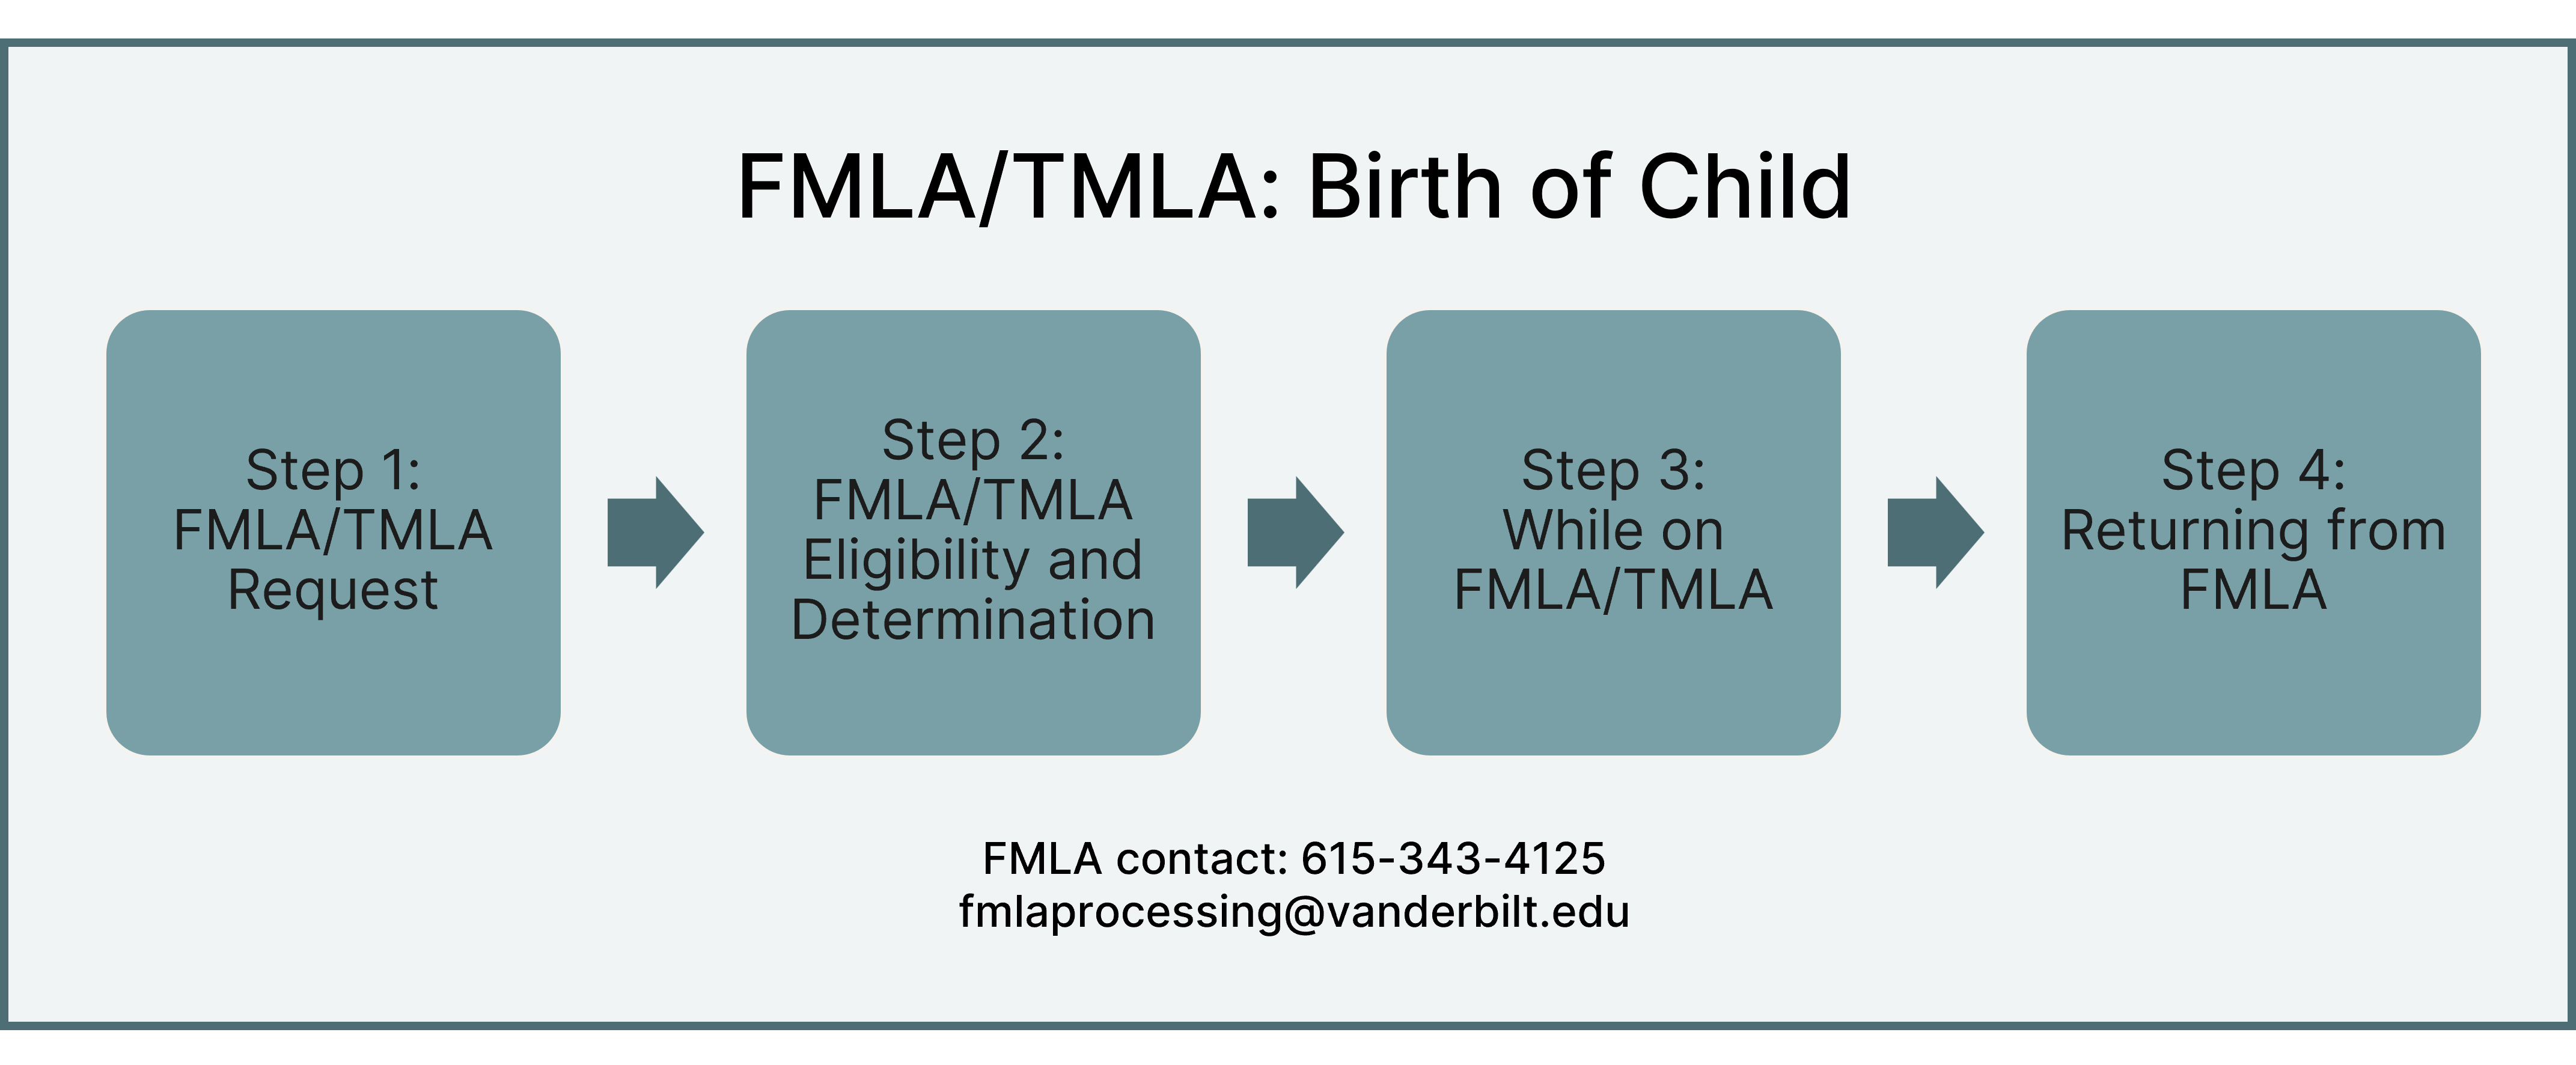 FMLA and TMLA for birth of child